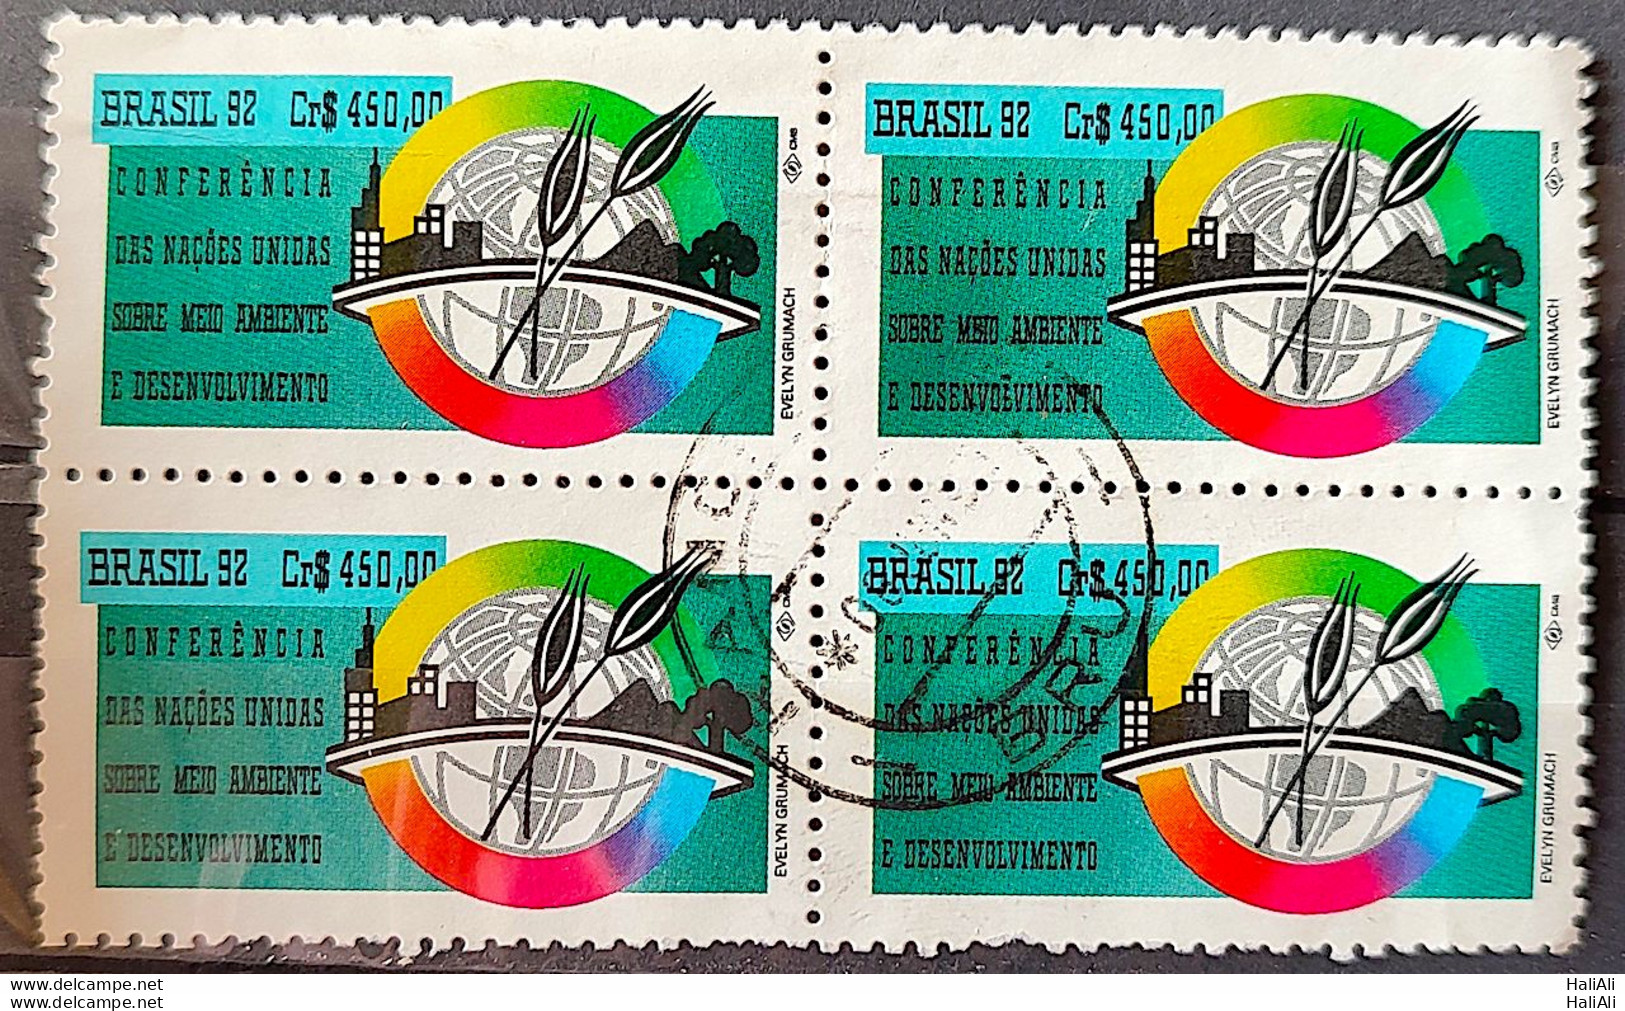 C 1799 Brazil Stamp Conference Eco 92 Rio De Janeiro Environment 1992 Block Of 4 Circulated 1 - Oblitérés